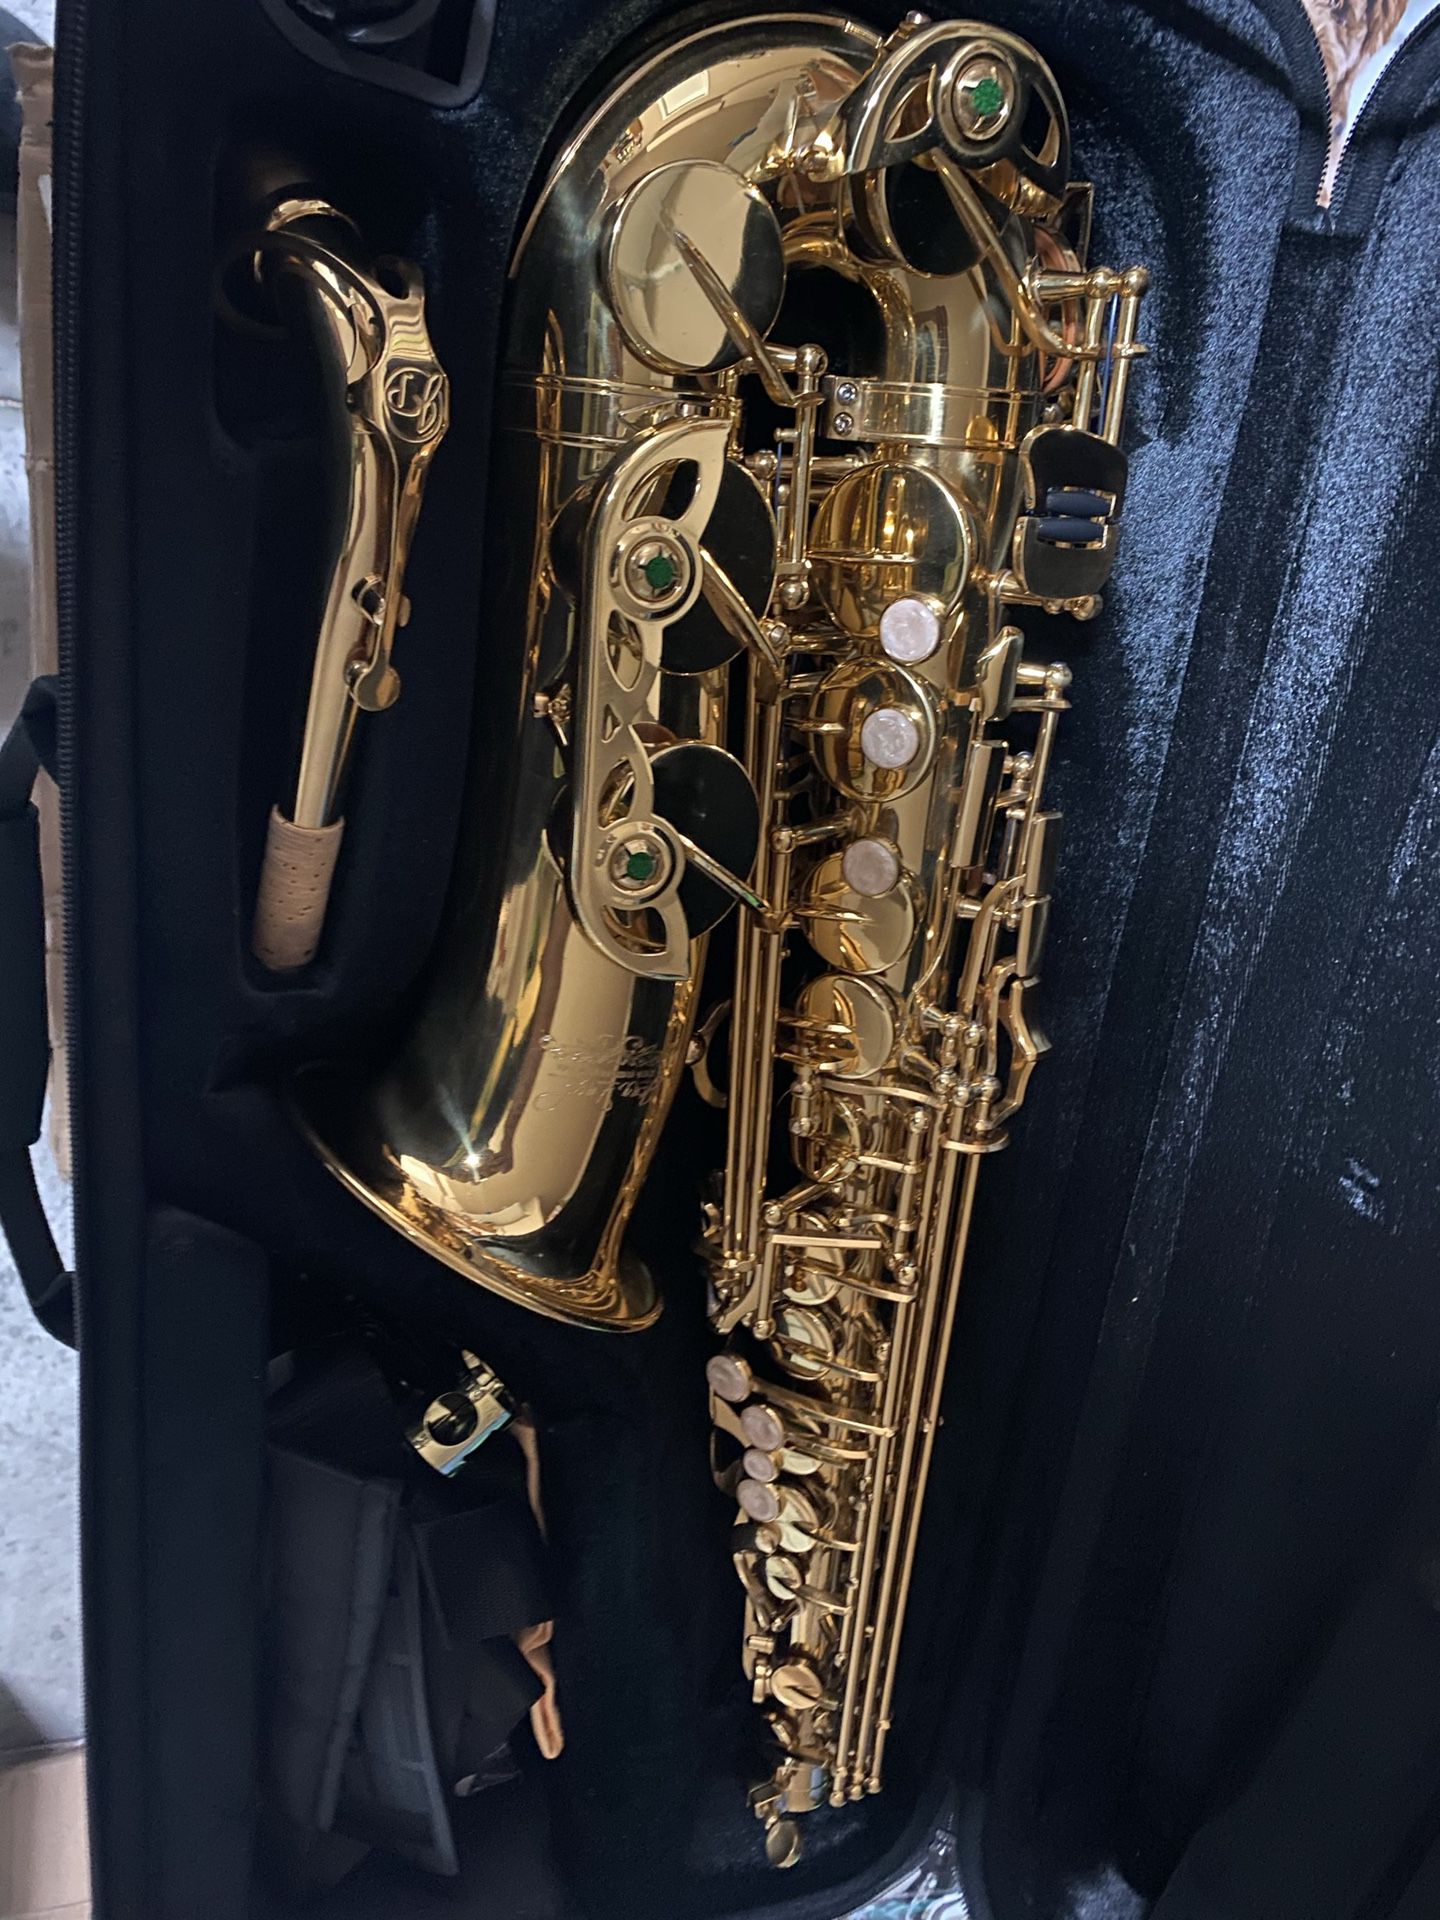 Jean paul AS-400 saxophone